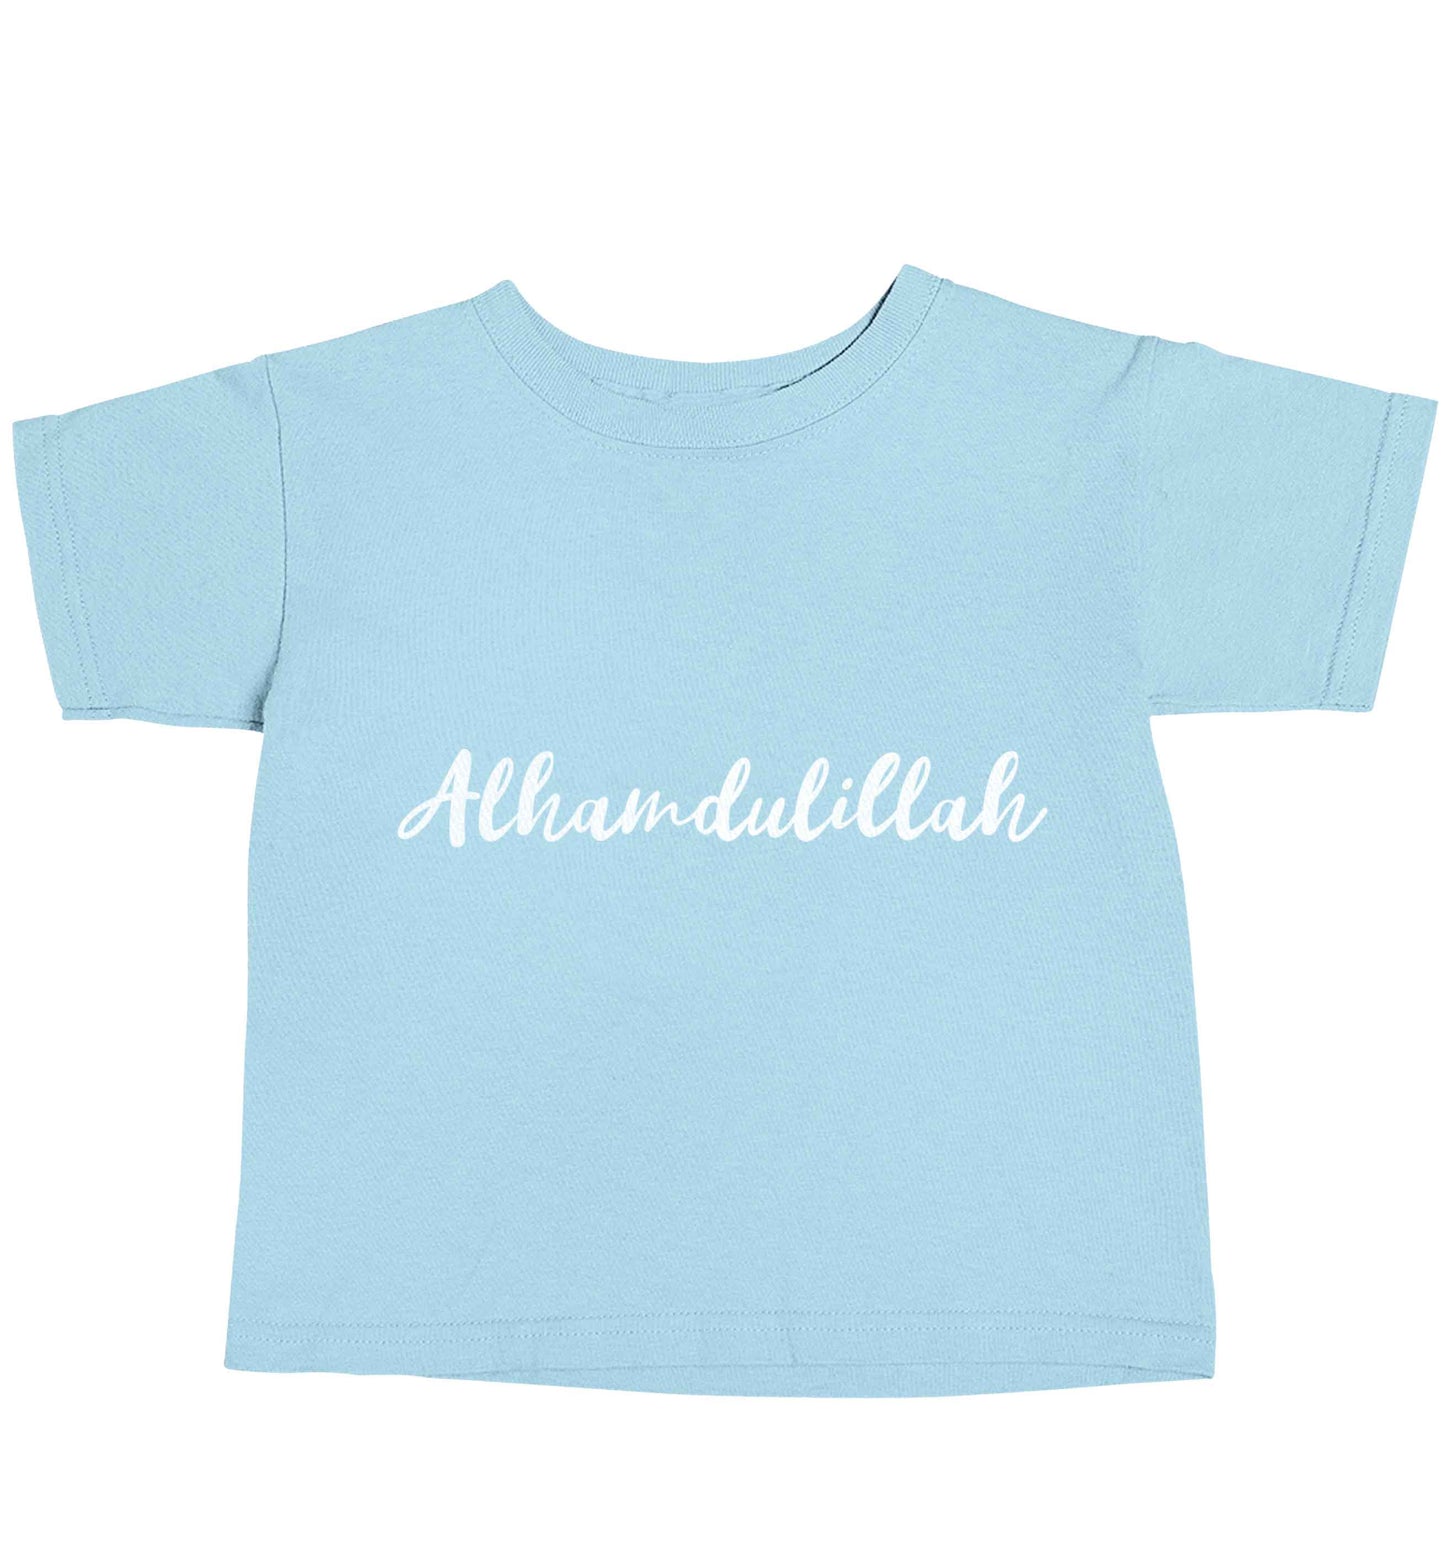 alhamdulillah light blue baby toddler Tshirt 2 Years